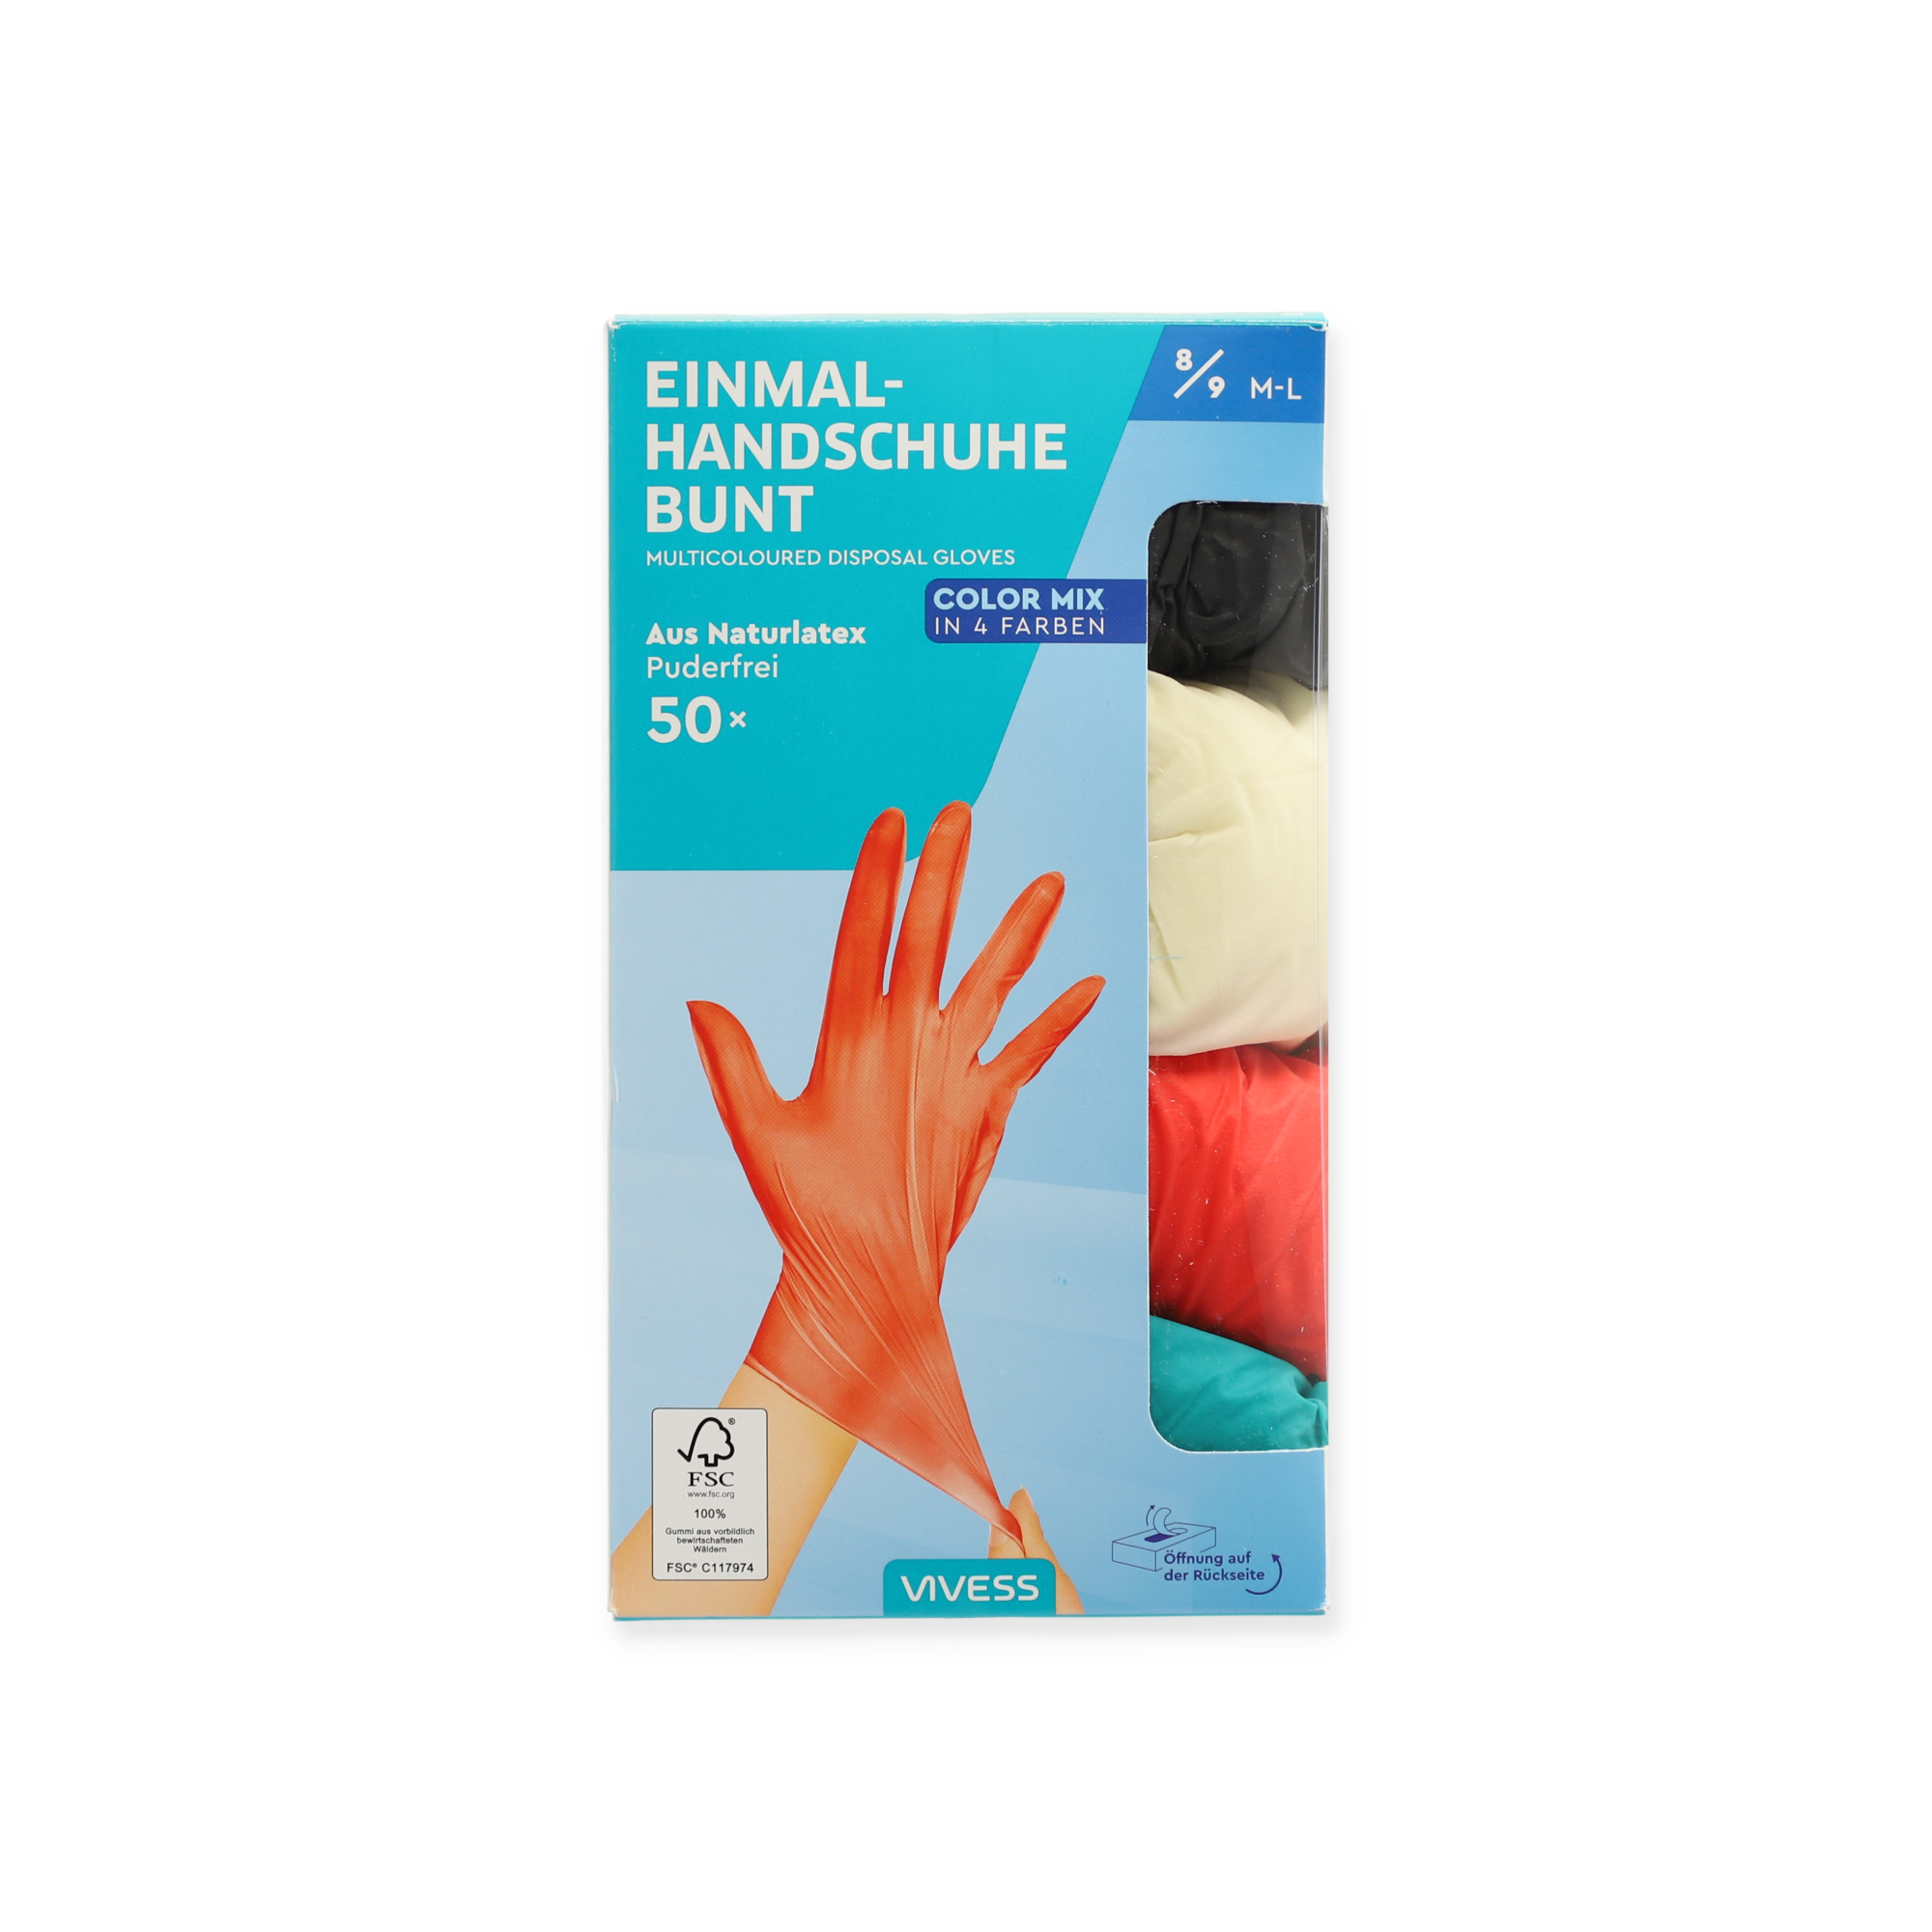 Einmal-Handschuhe Latex bunt Gr. M/L 50 Stück + product picture